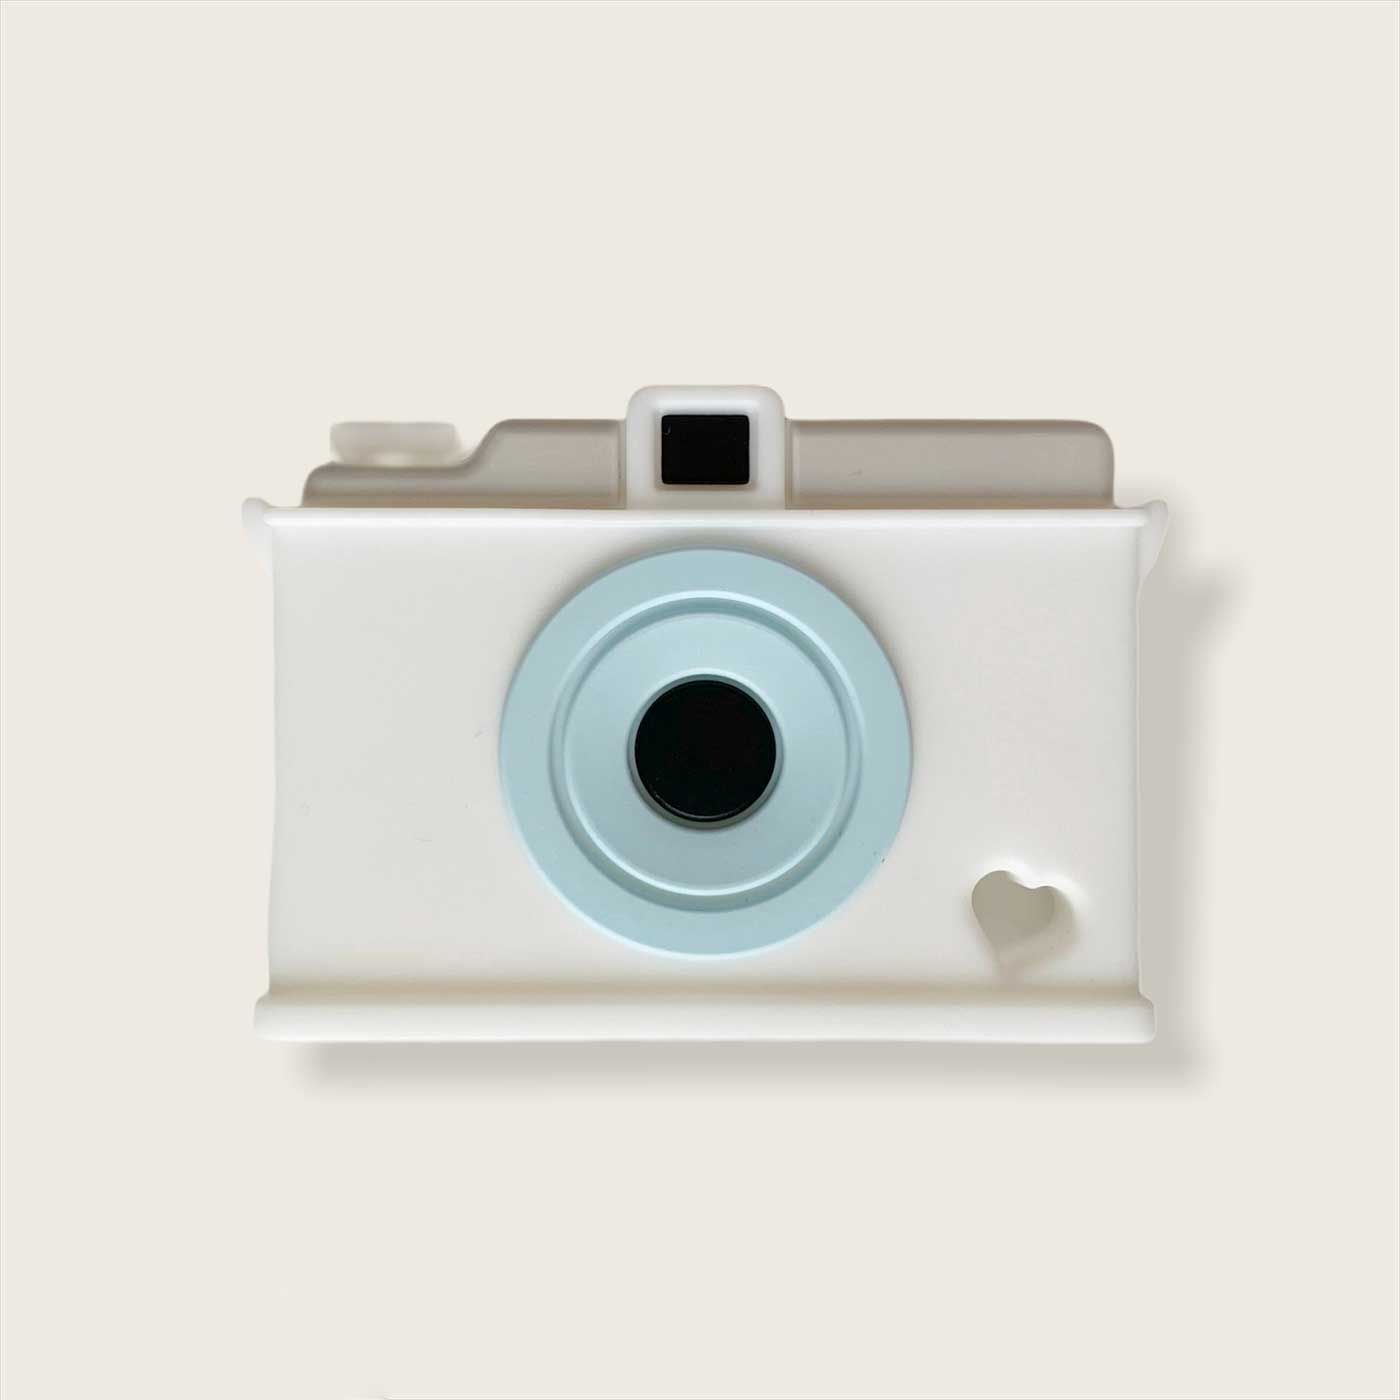 Brightchewelry - Camera Teether - White - 1